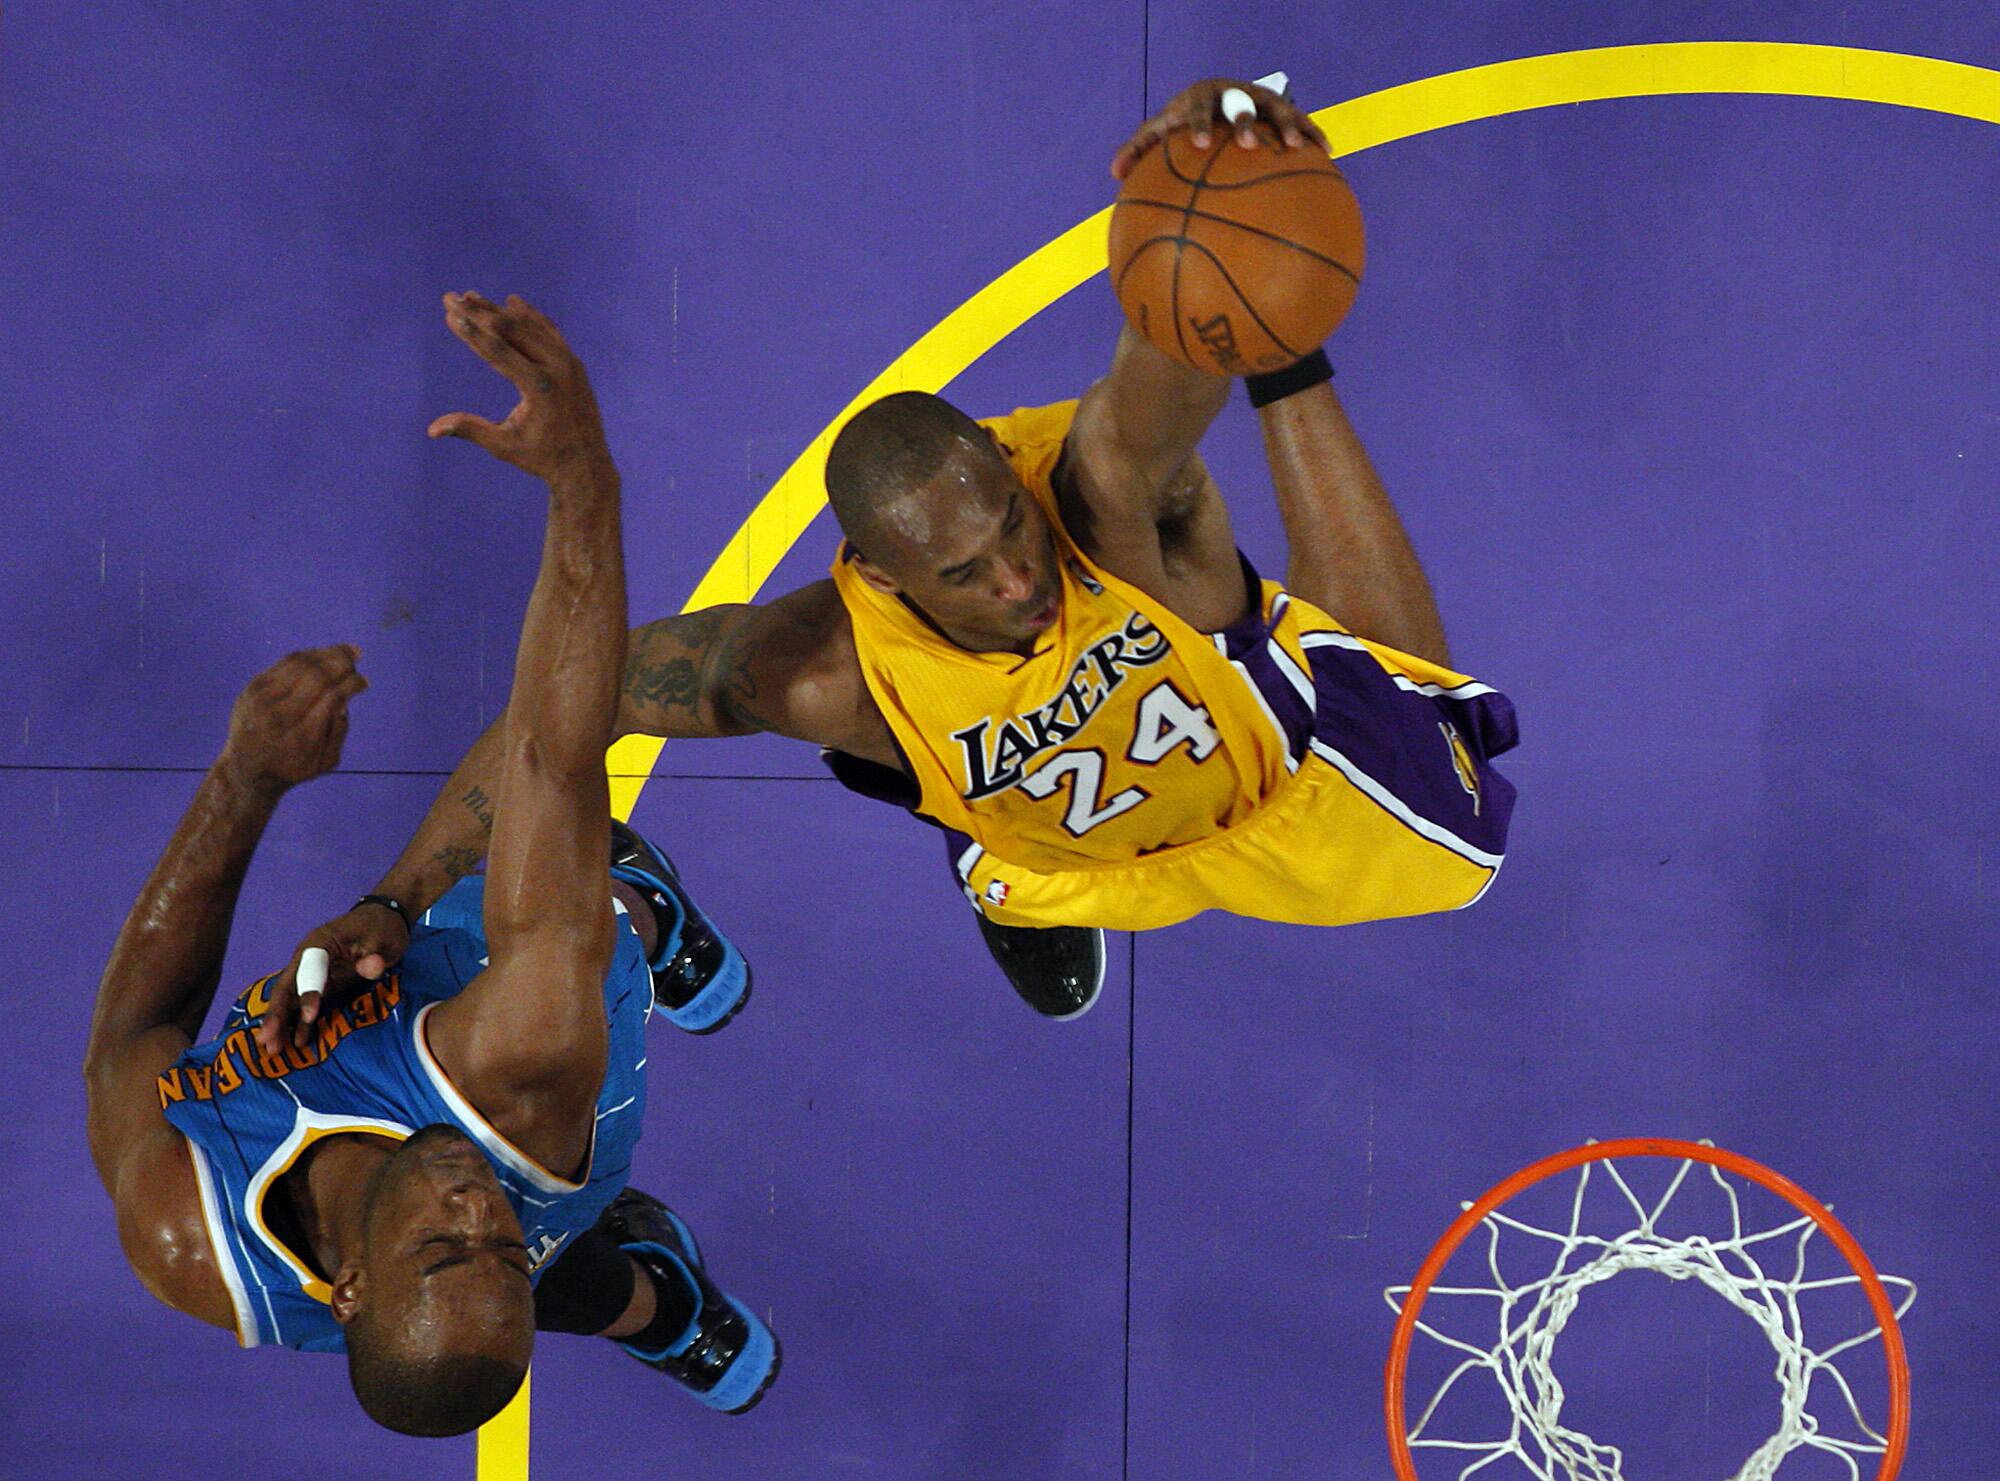 Kobe Bryant elevates past Hornets defender Carl Landry for a slam dunk.